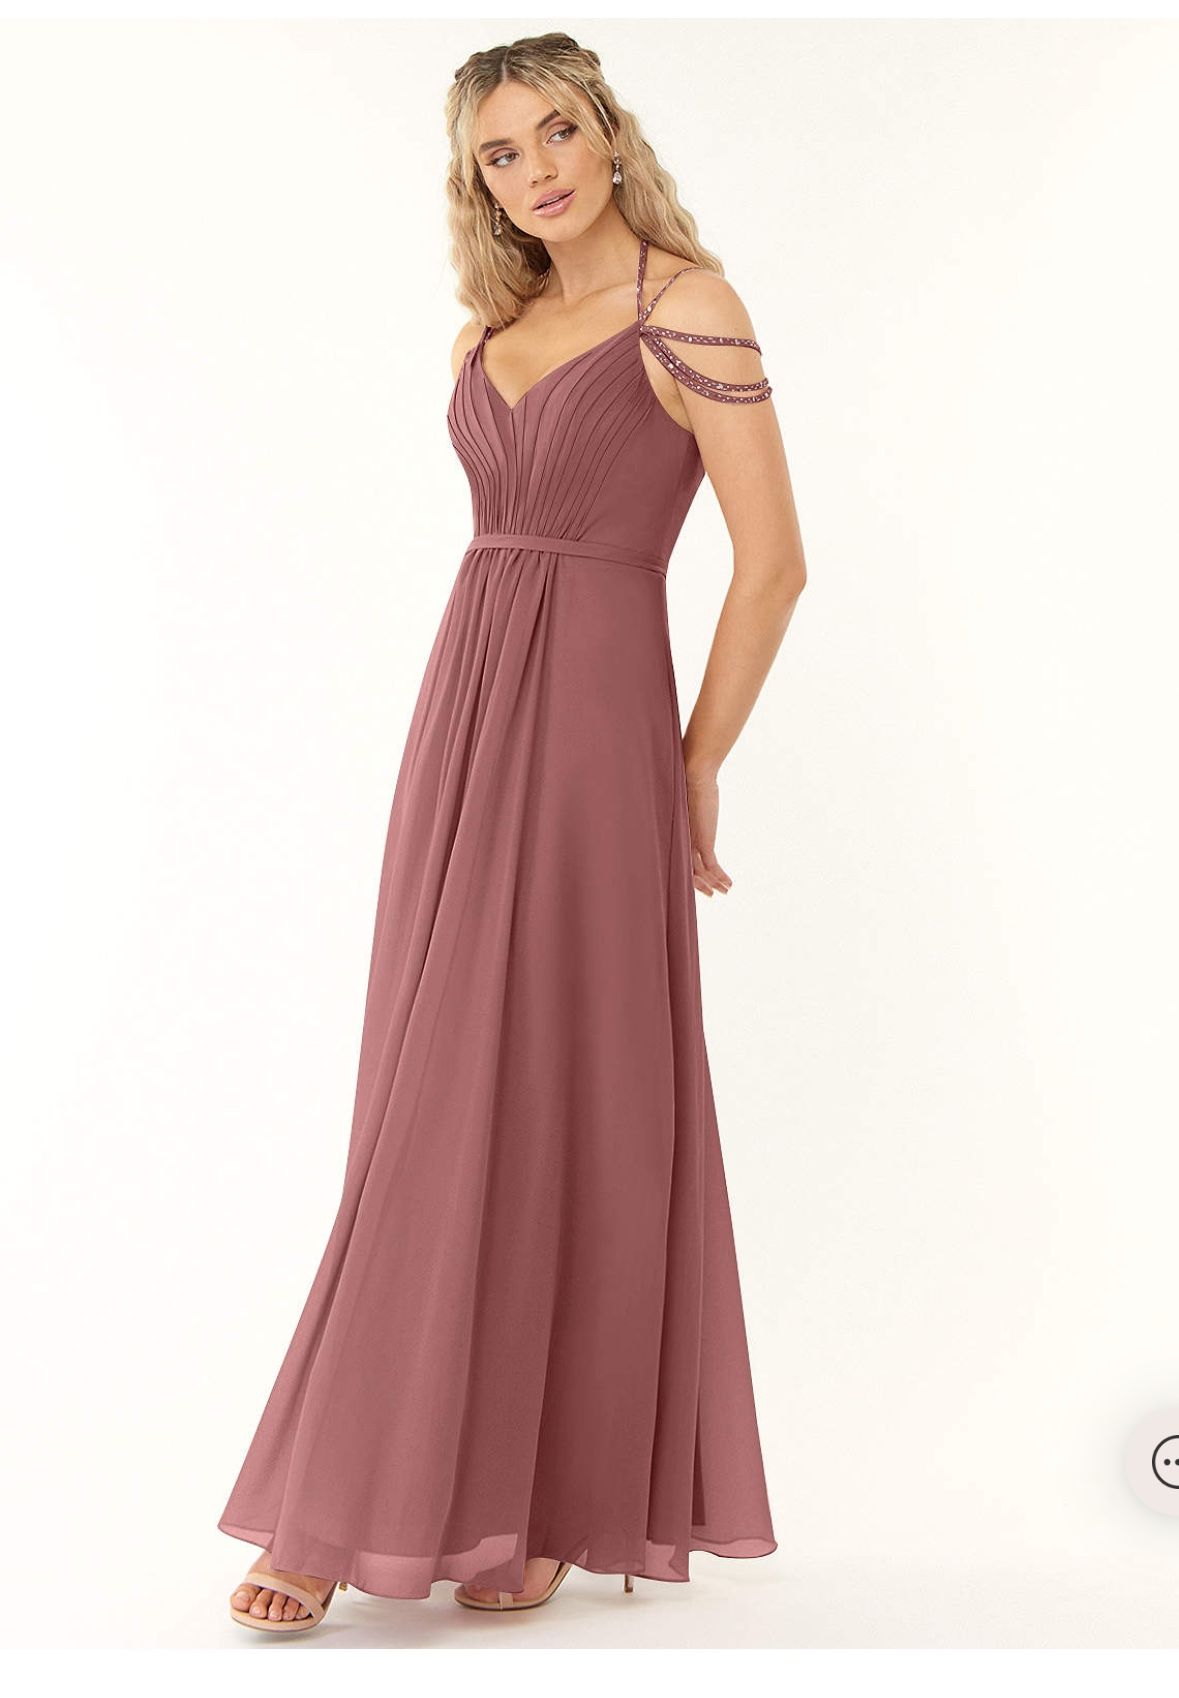 AZAZIE SOLANA: Desert Rose Bridesmaid Dress